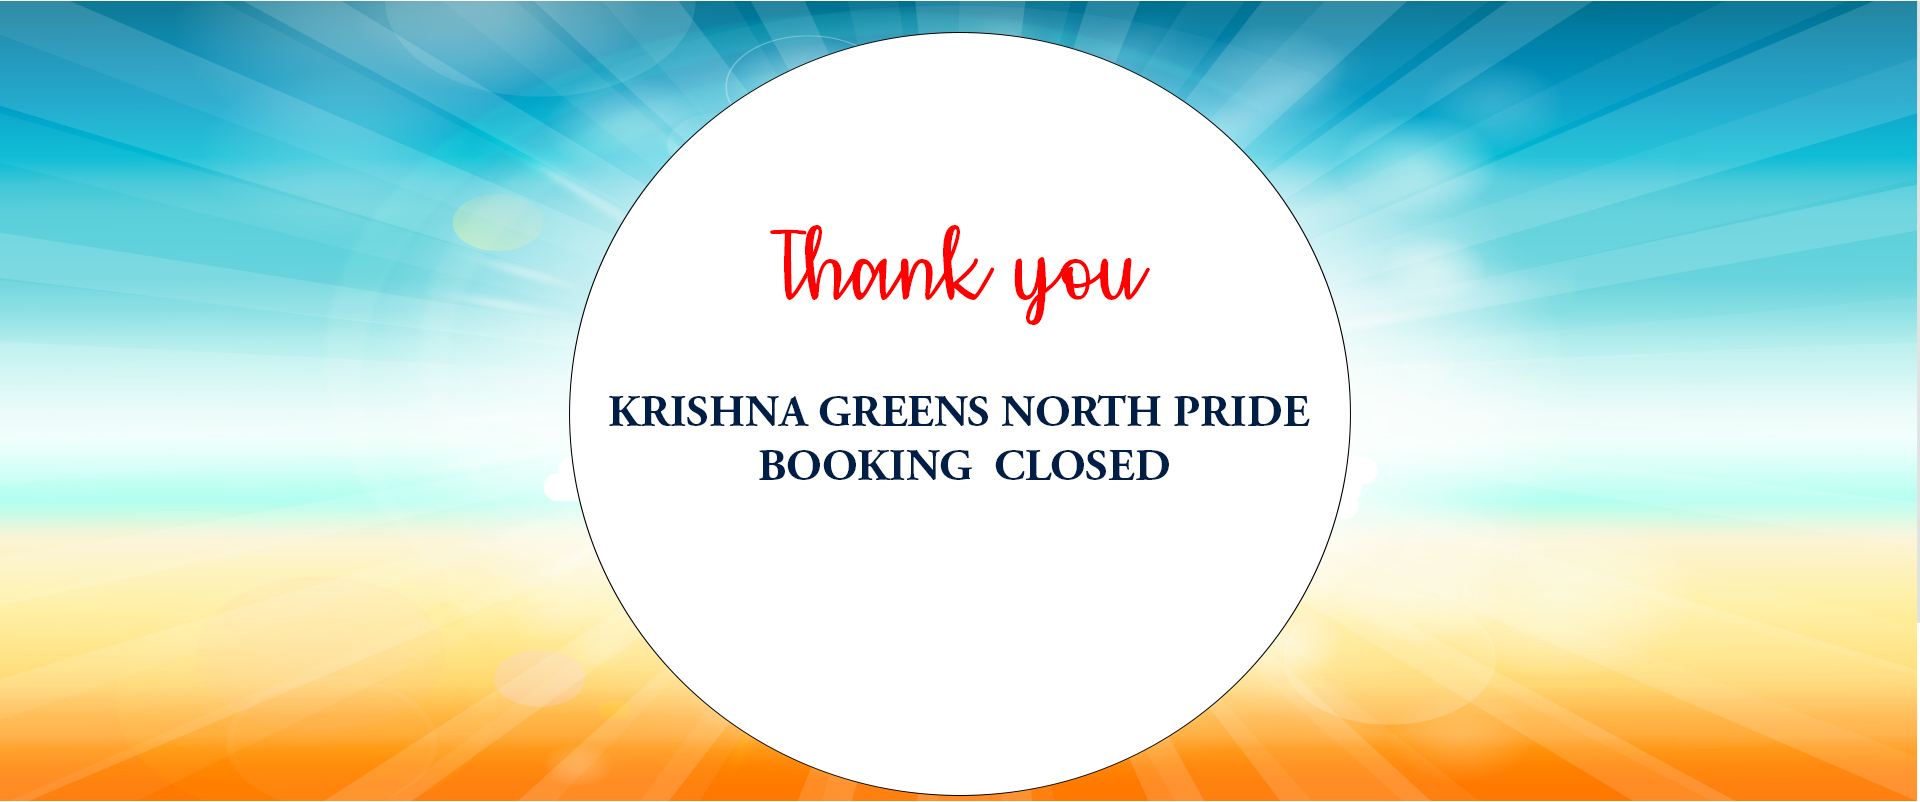 krishna-greens-north-pride